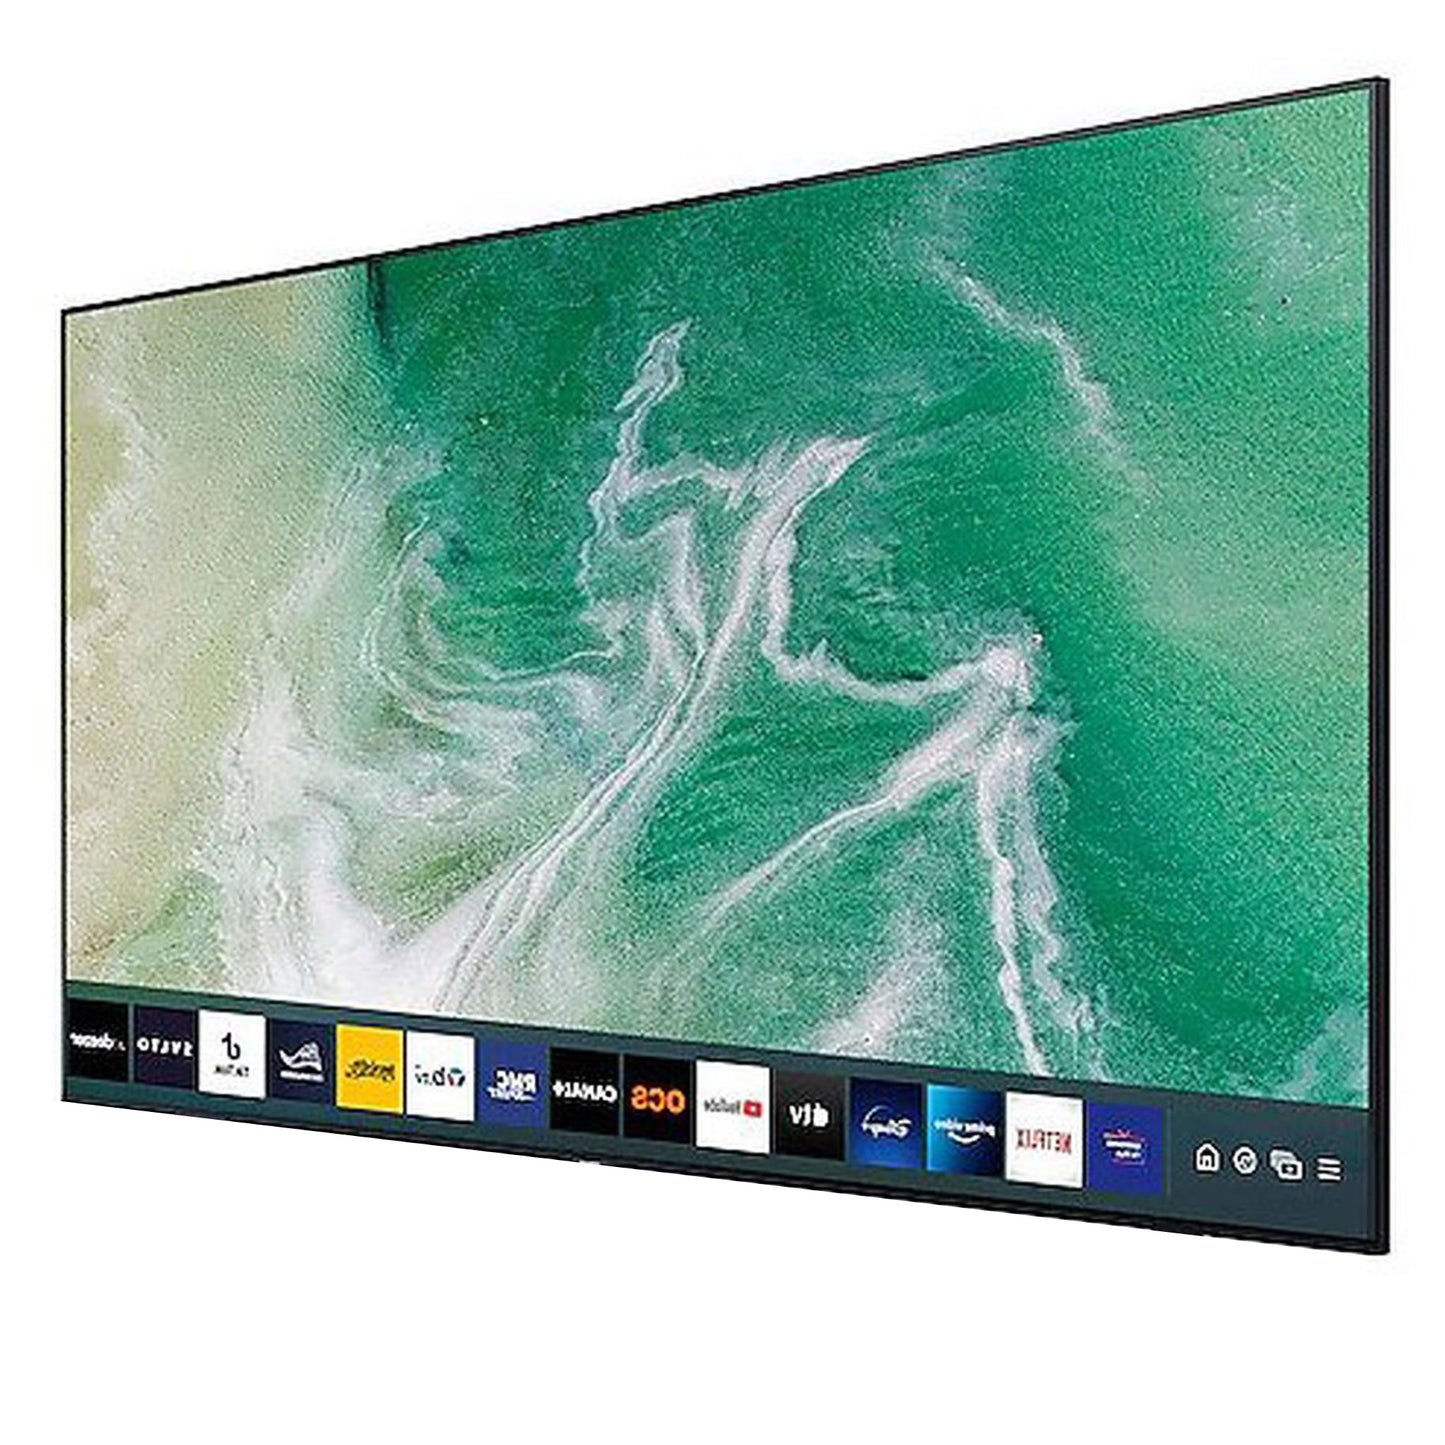 Samsung 58 inch Smart TV, 58TU6925